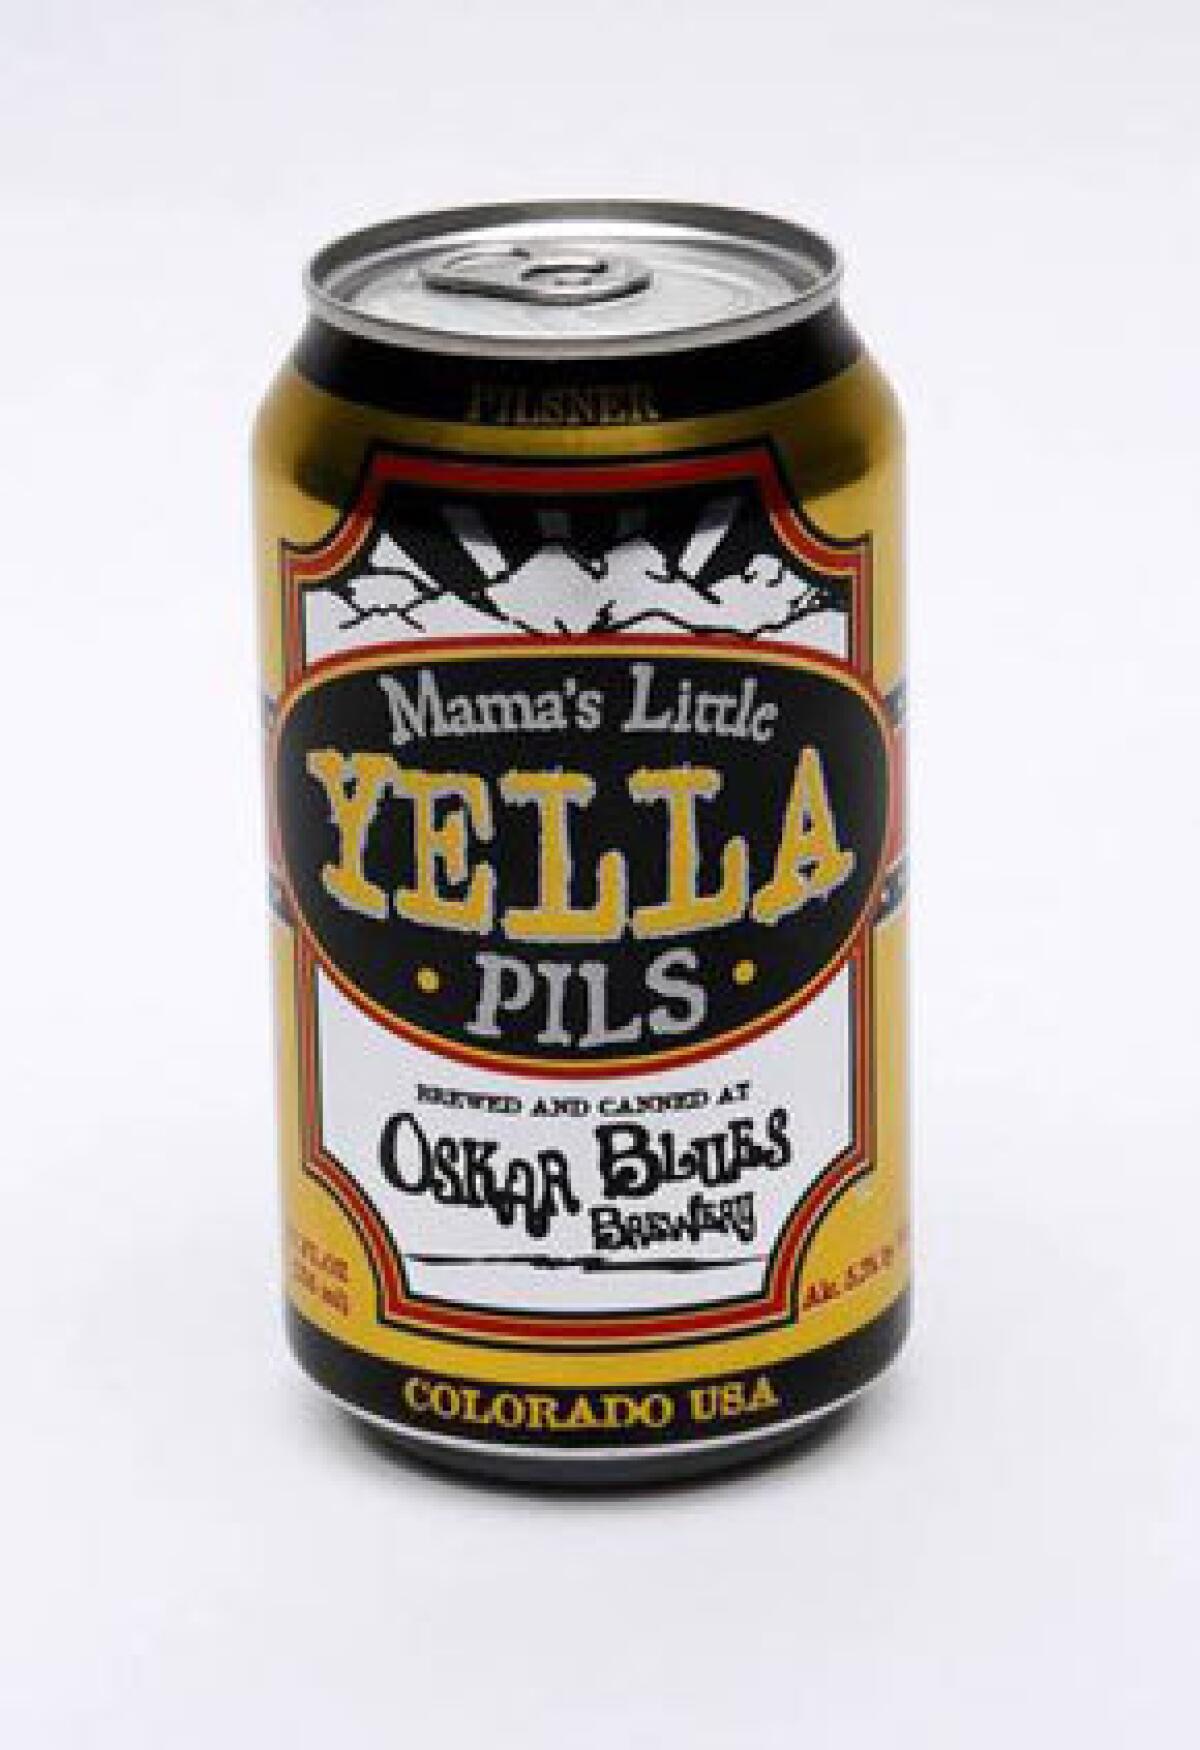 Oskar Blues Brewery's Mama's Little Yella Pils.